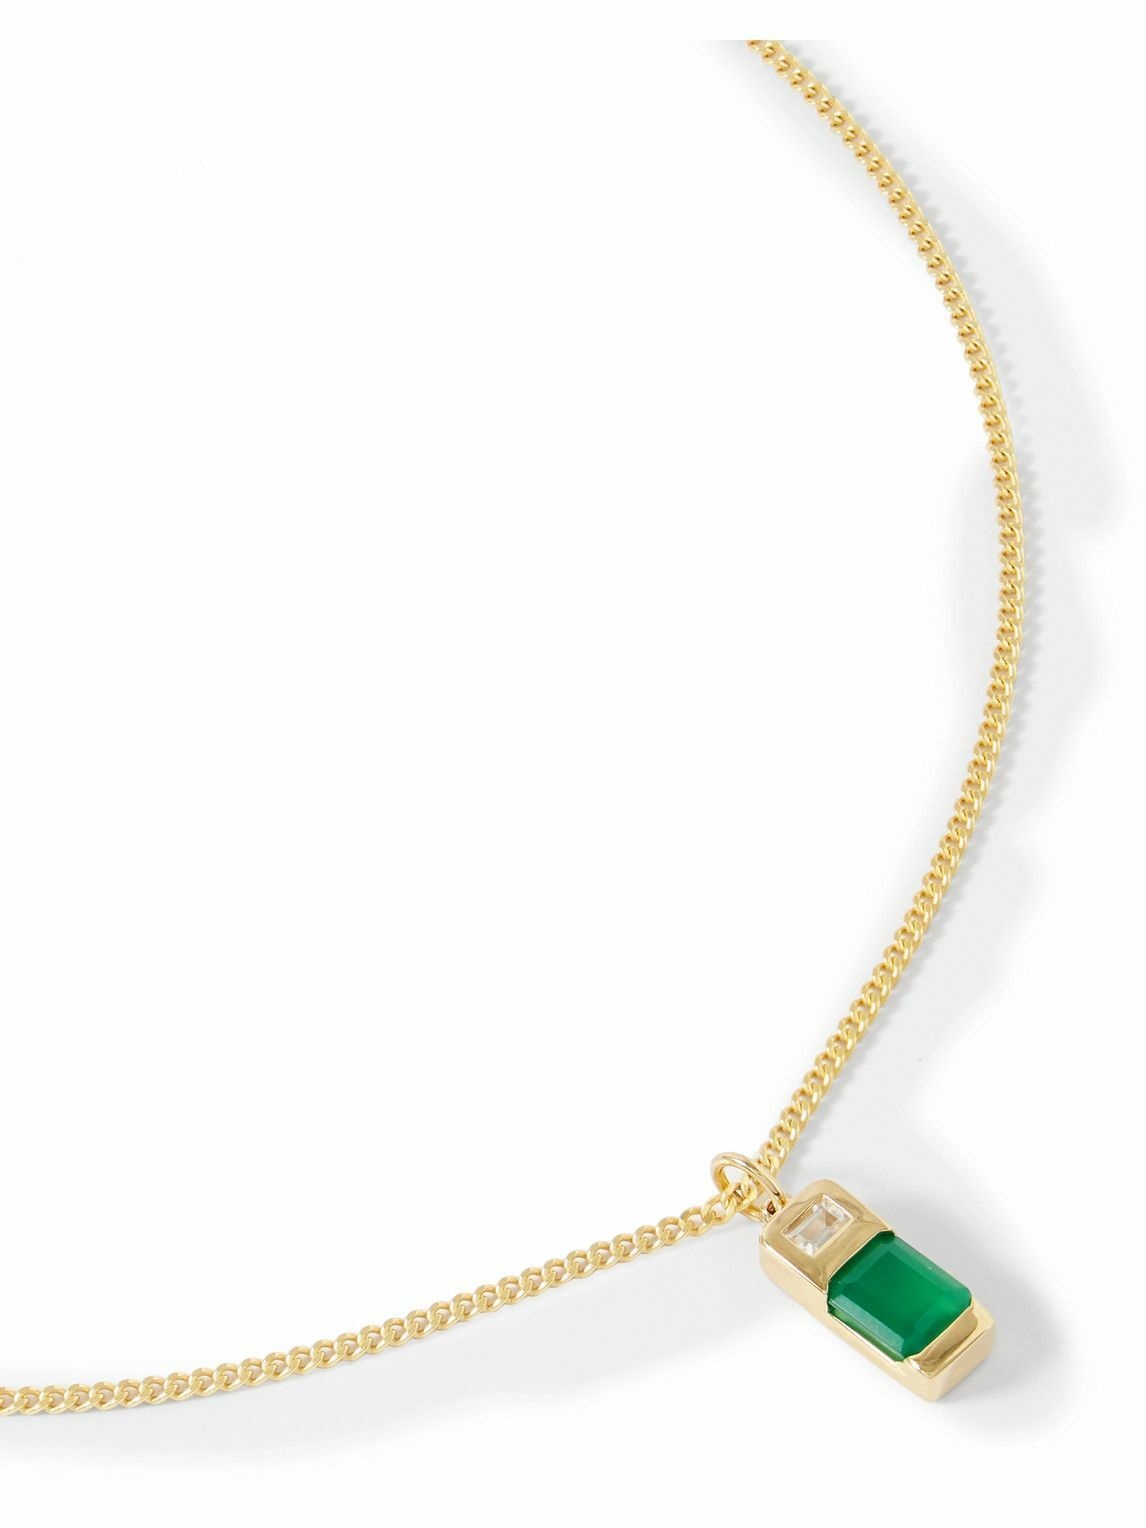 Photo: Miansai - Everett Williams Gold Vermeil, Agate and Sapphire Necklace